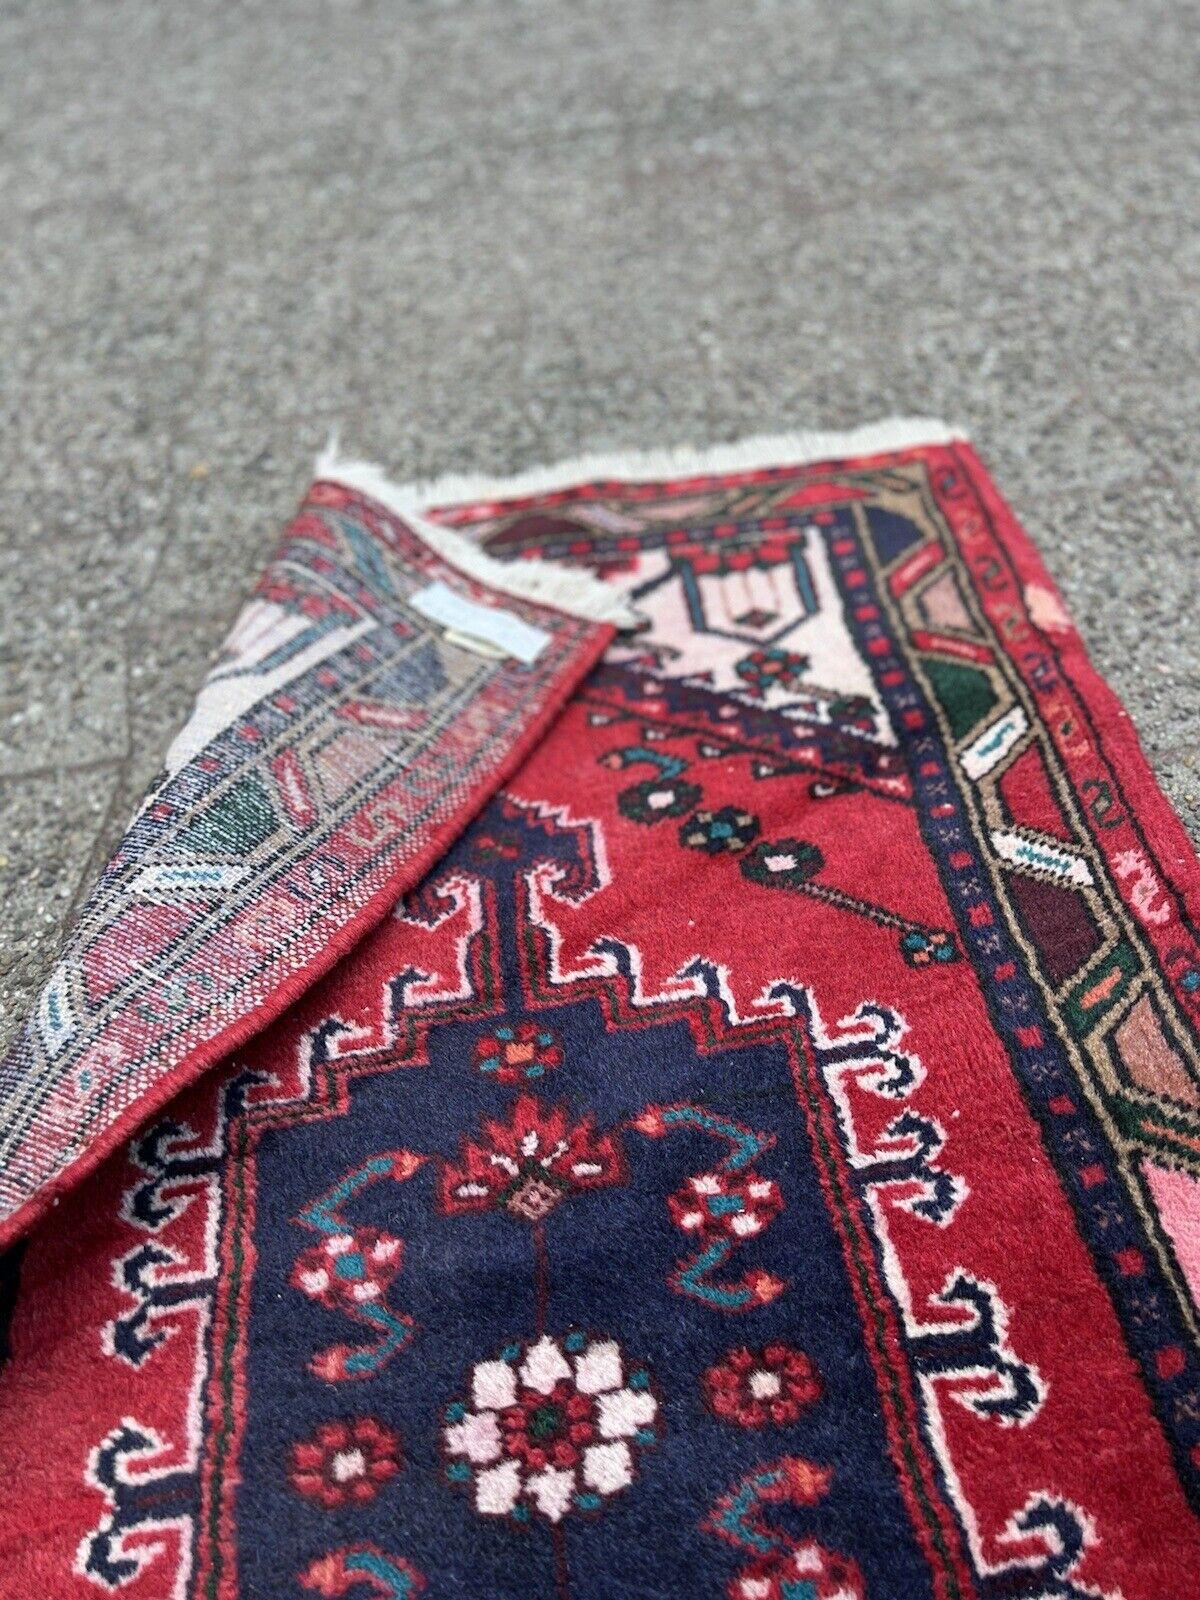 Handmade Vintage Persian Style Hamadan Rug 2.3' x 4', 1970s - 1S58 For Sale 3